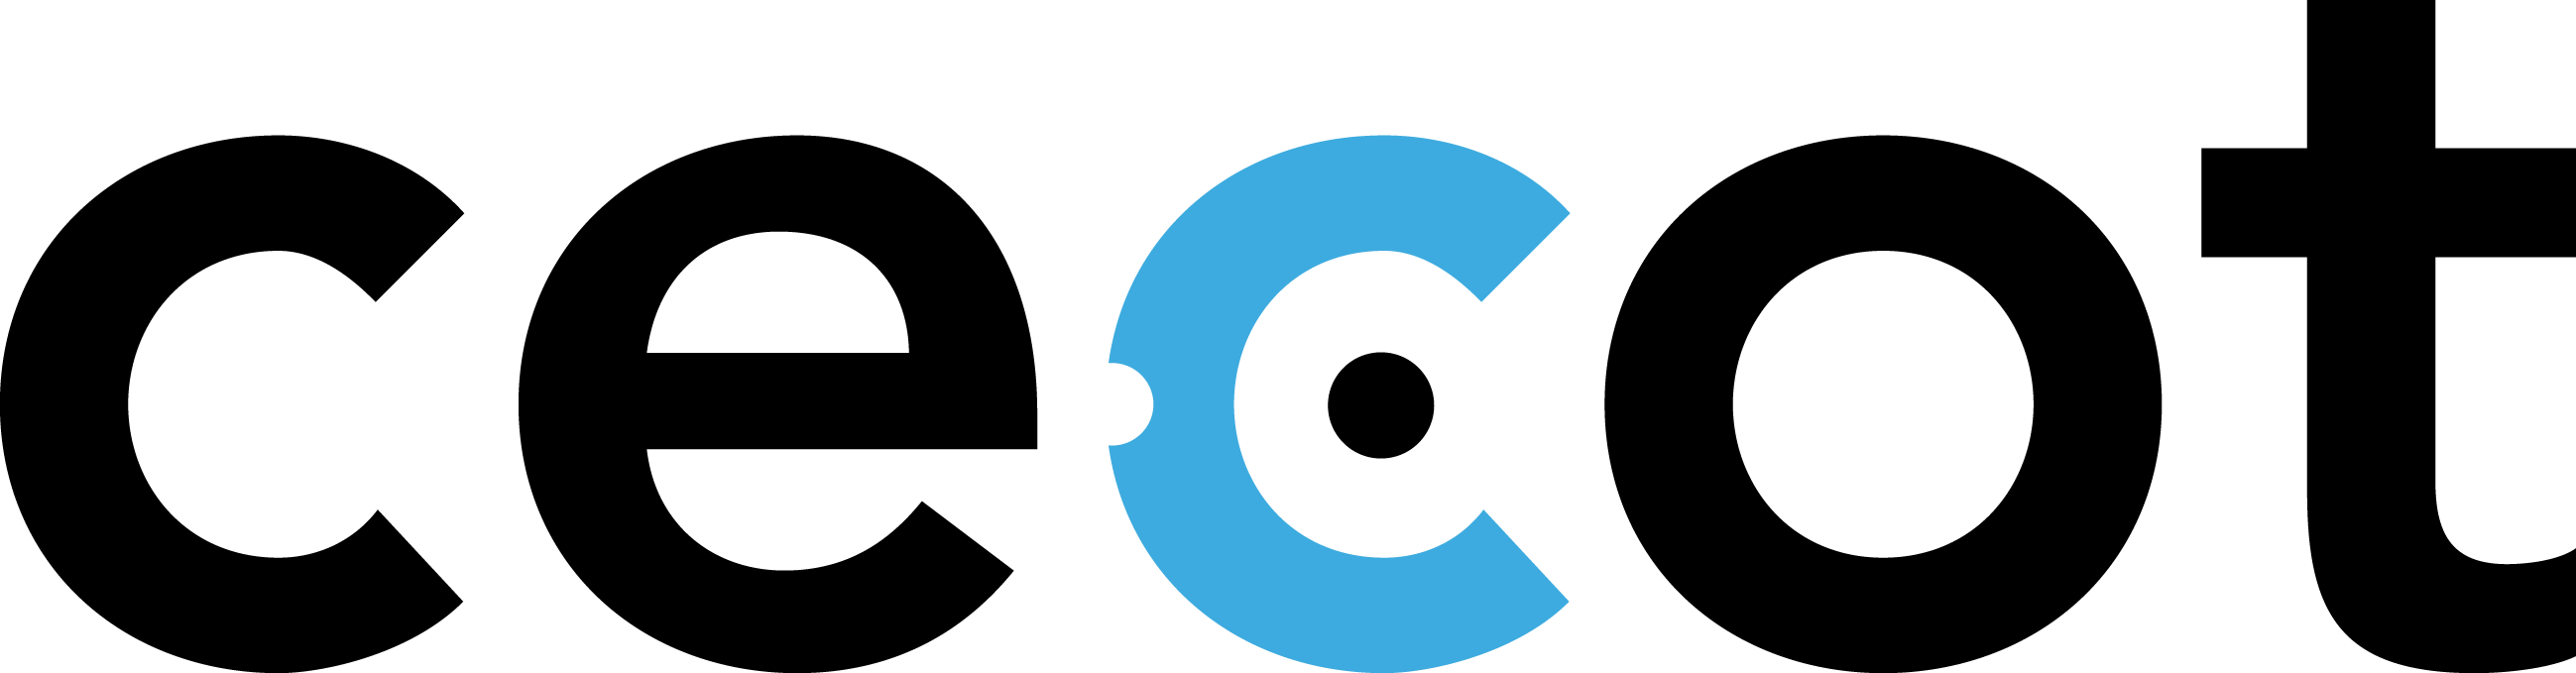 Logo_cecot